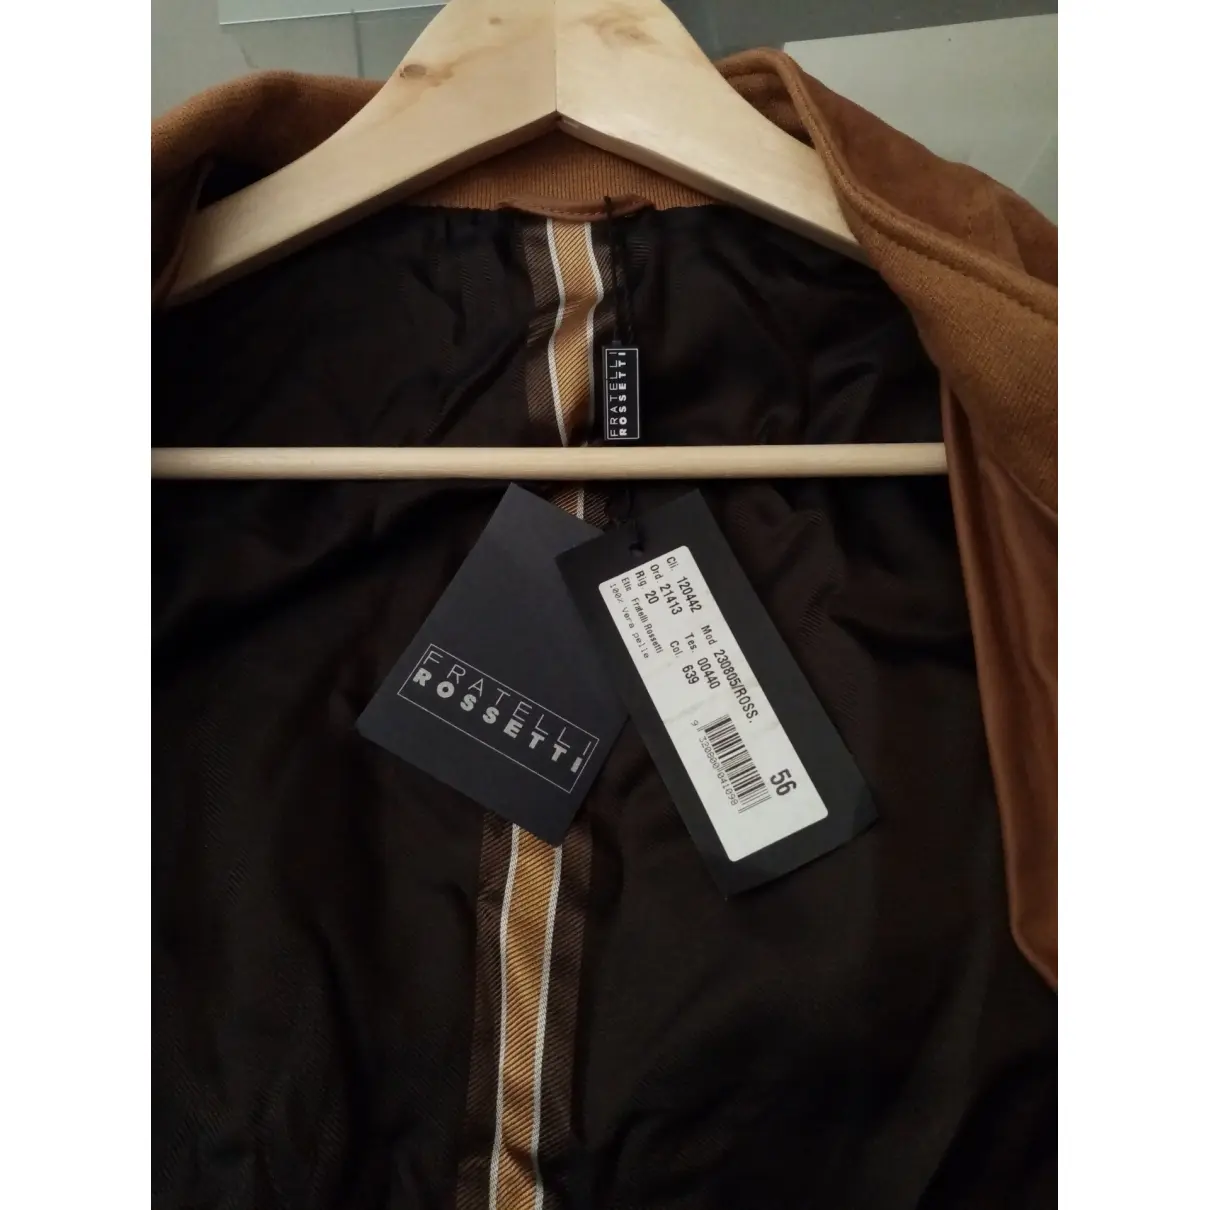 Buy Fratelli Rossetti Jacket online